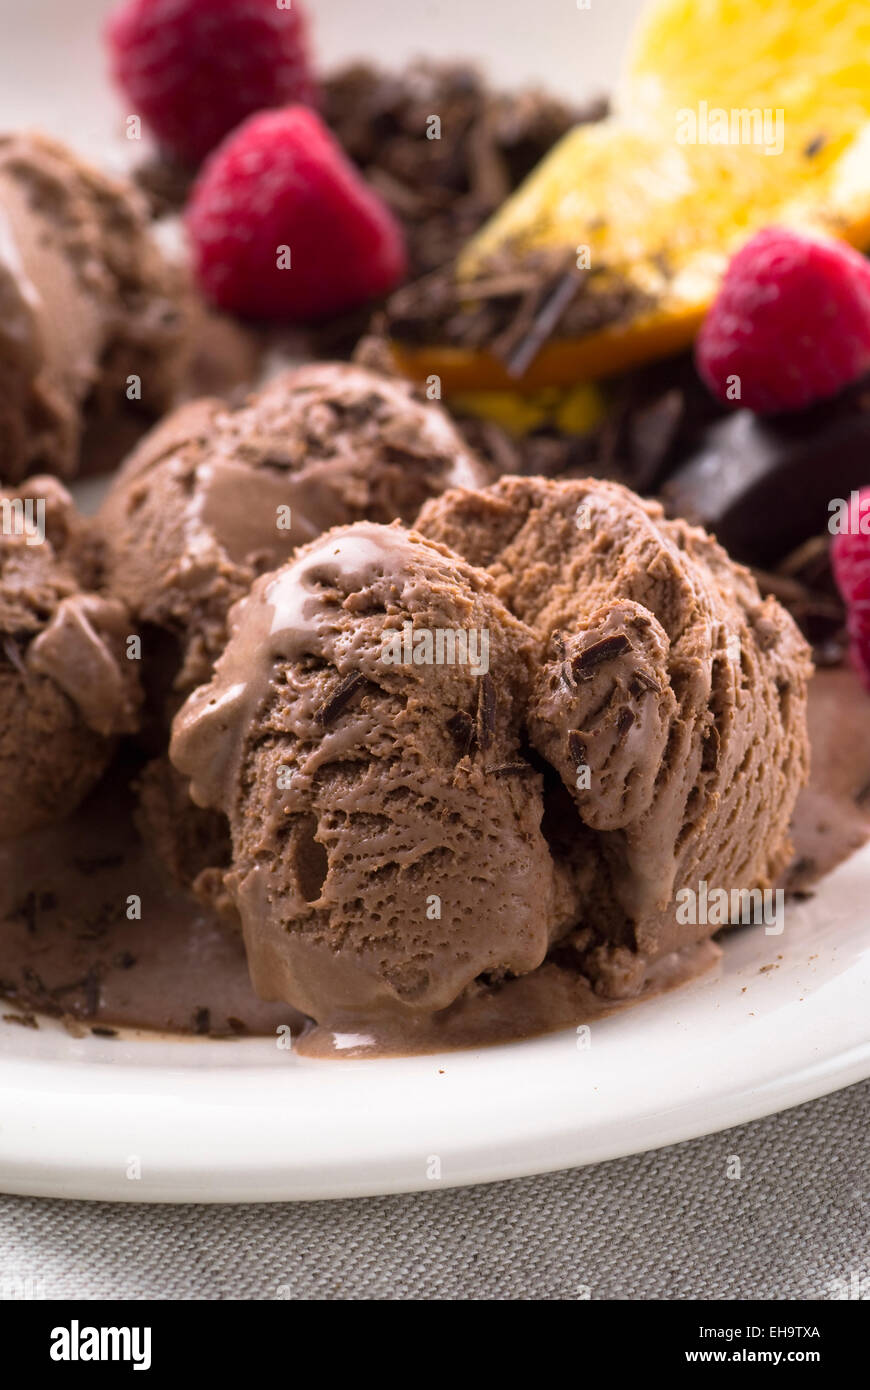 Chocolate ice cream with grated chocolate. Fresh raspberries and sliced orange as garnish. Stock Photo